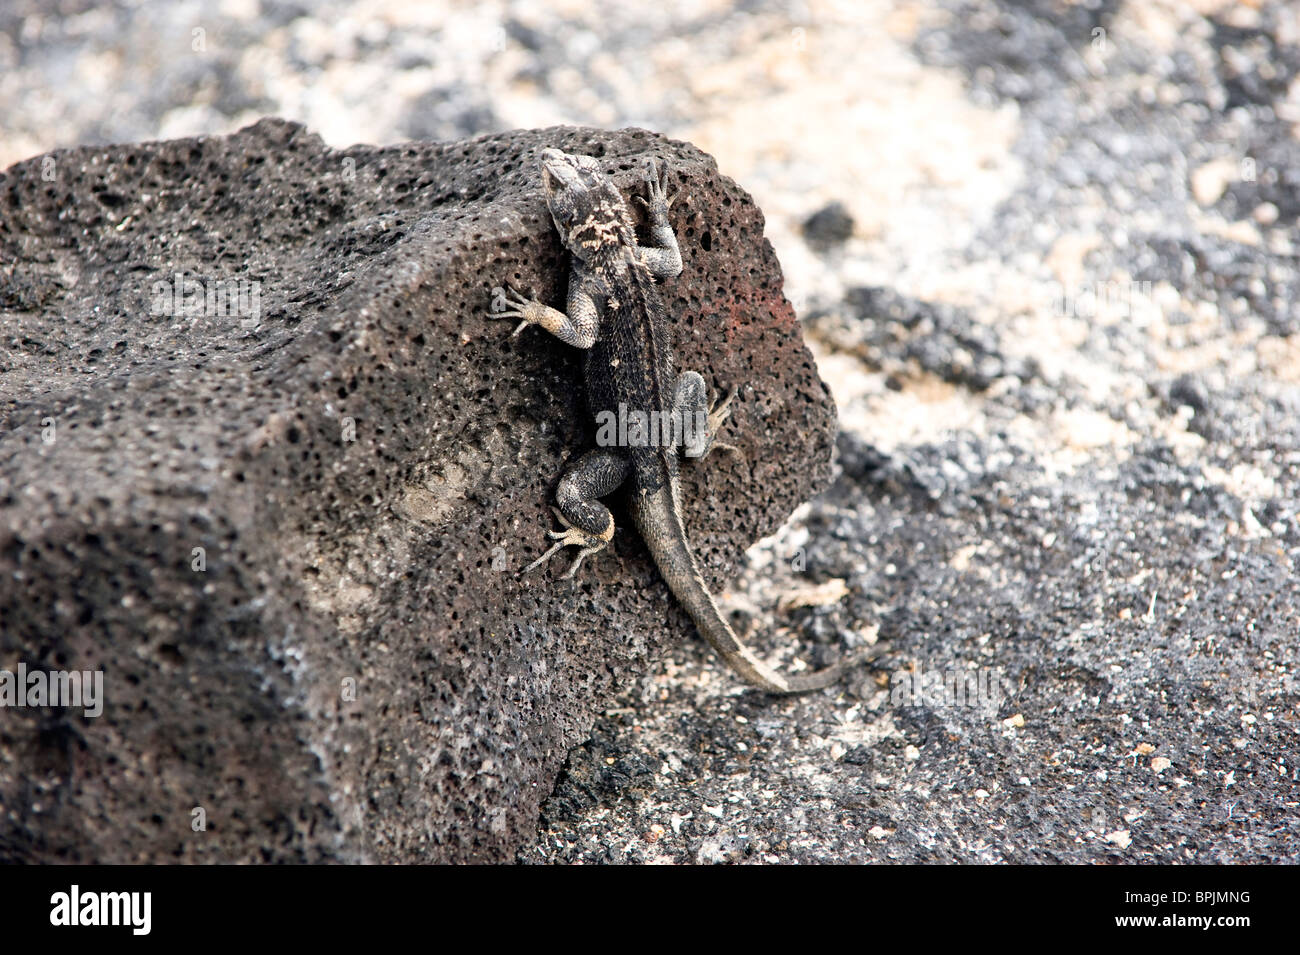 South America, Ecuador, Galapagos Islands,Leaf-toed Gecko on Isabella Island Stock Photo